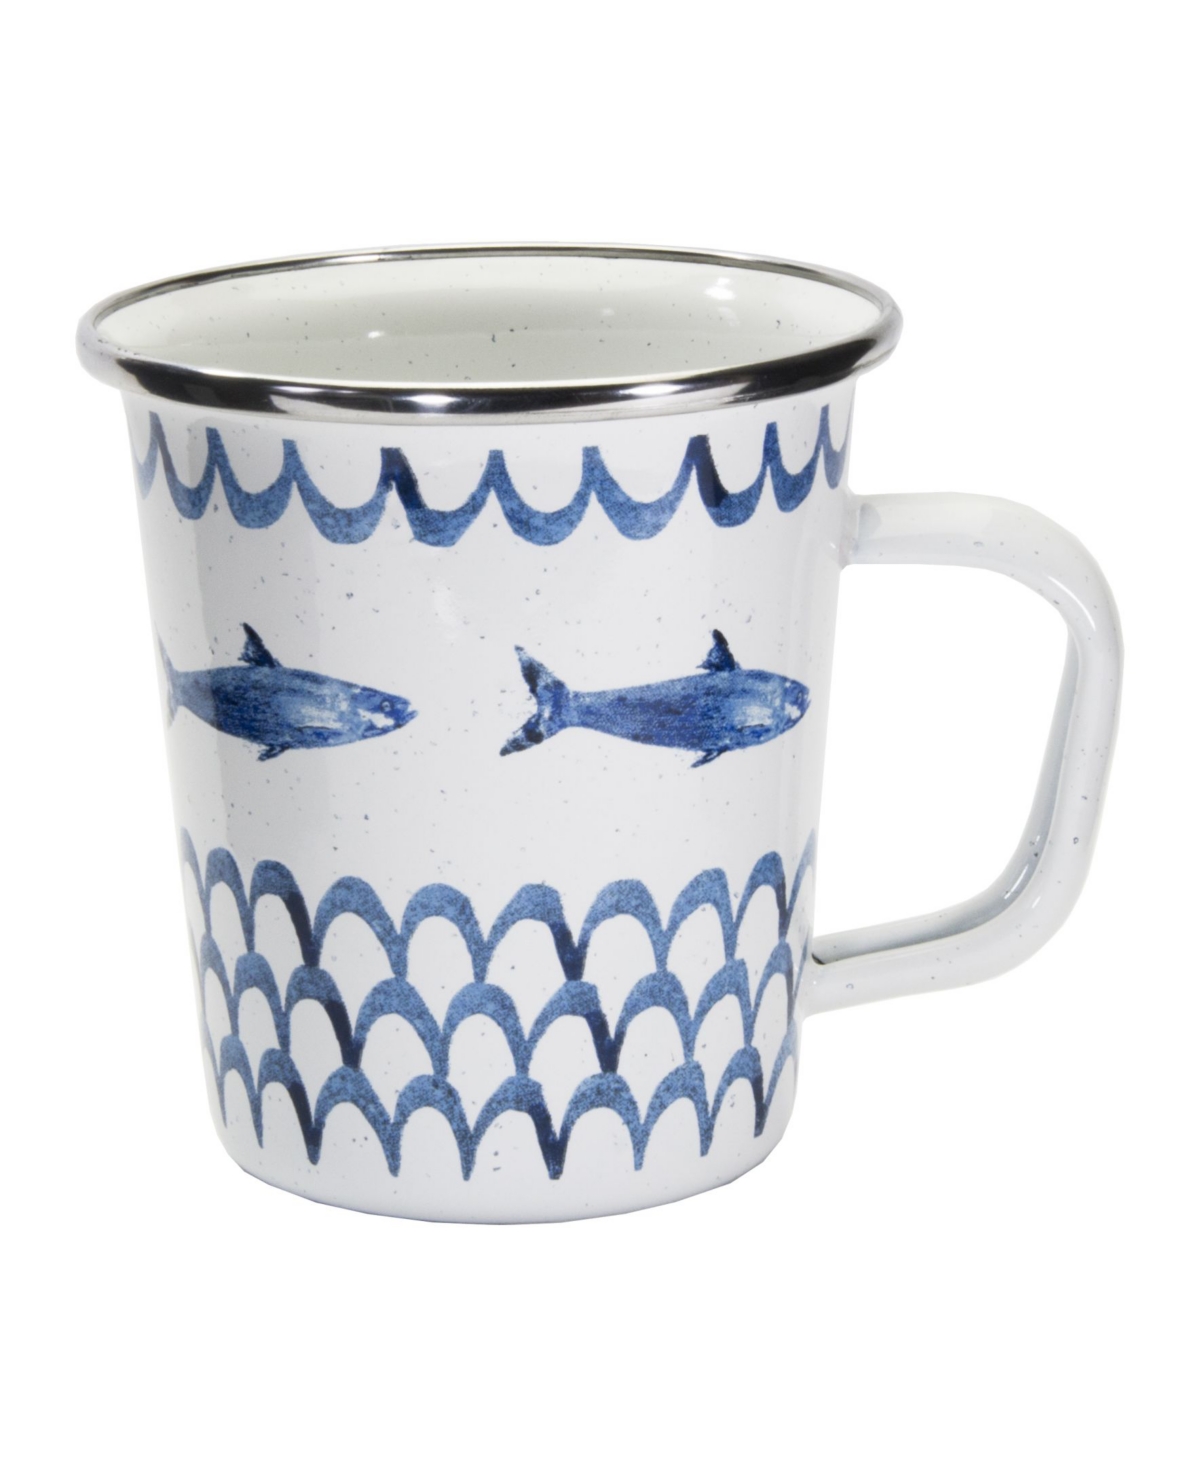 Fish Camp Enamelware Latte Mugs, Set of 4 - Blue